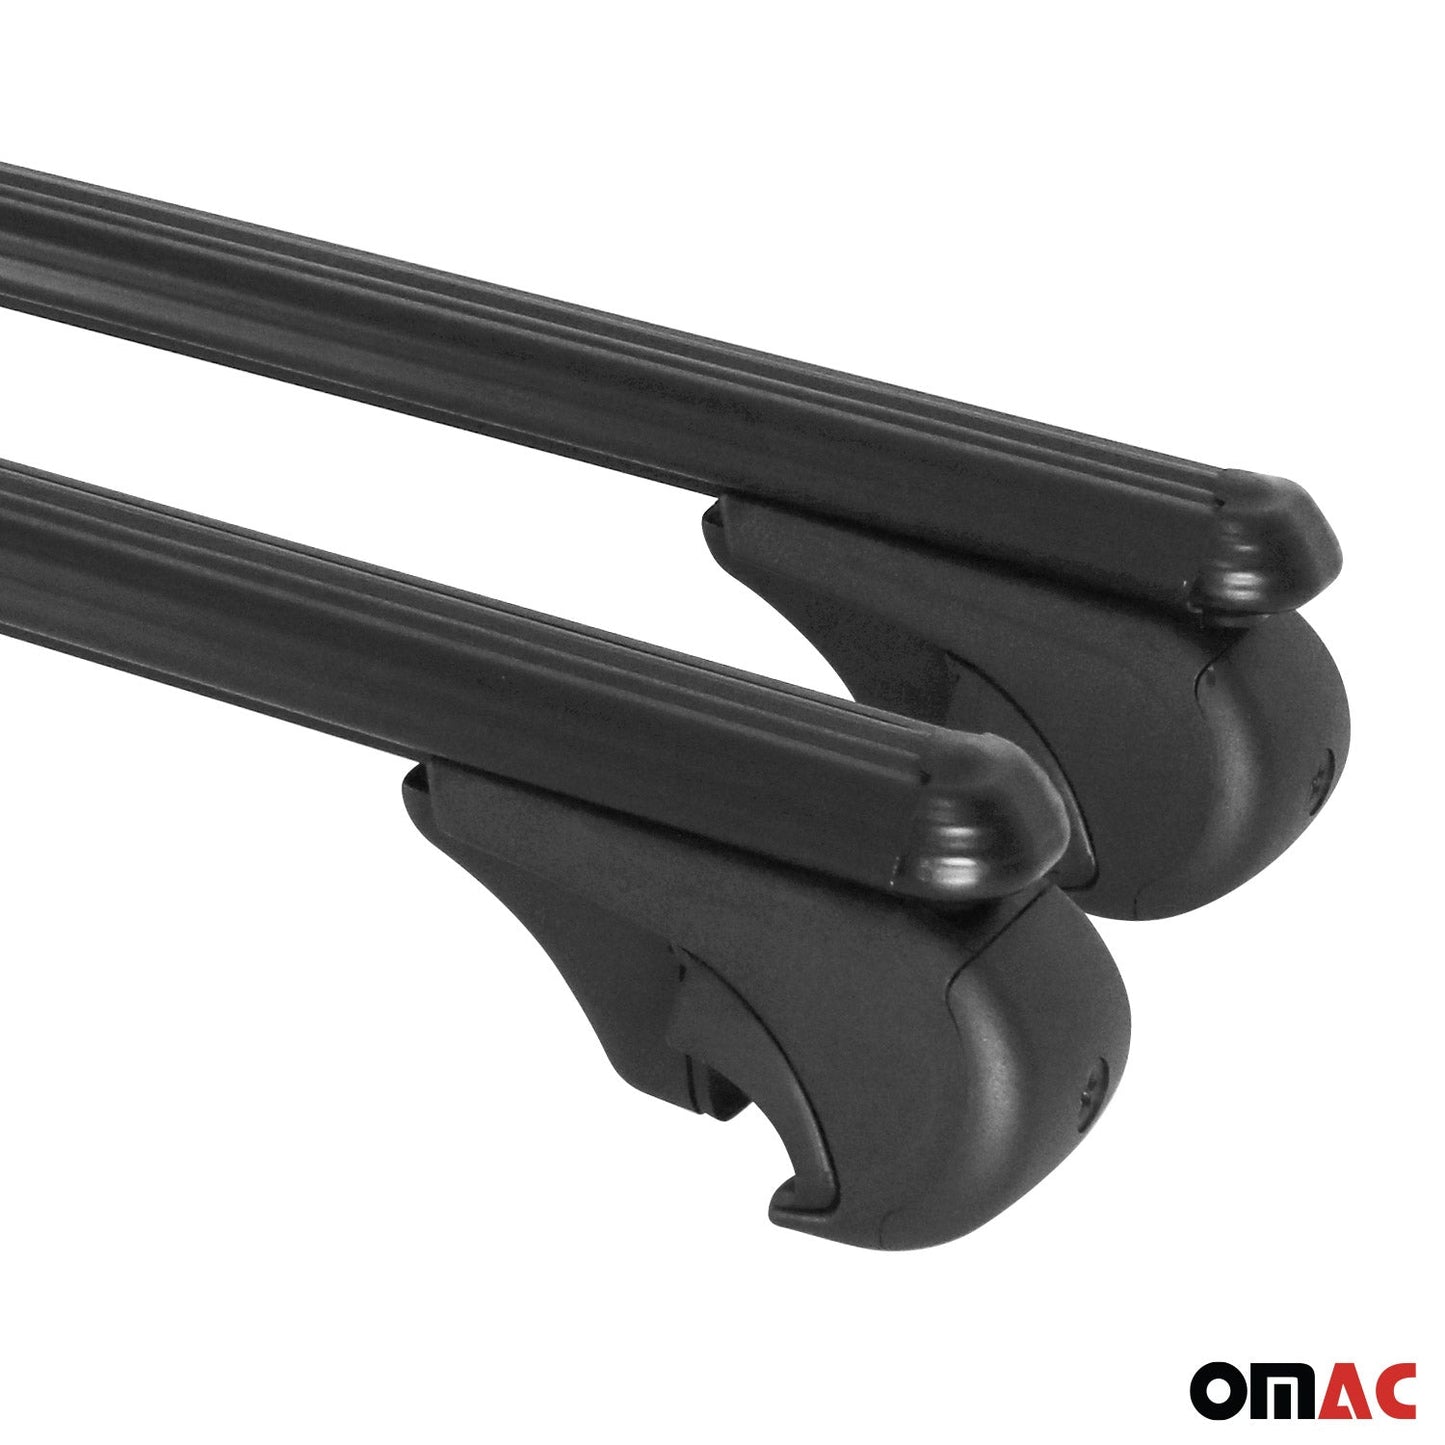 OMAC Lockable Roof Rack Cross Bars Carrier for Ford Explorer Sport Trac 2001-10 Black 26869696929XLB